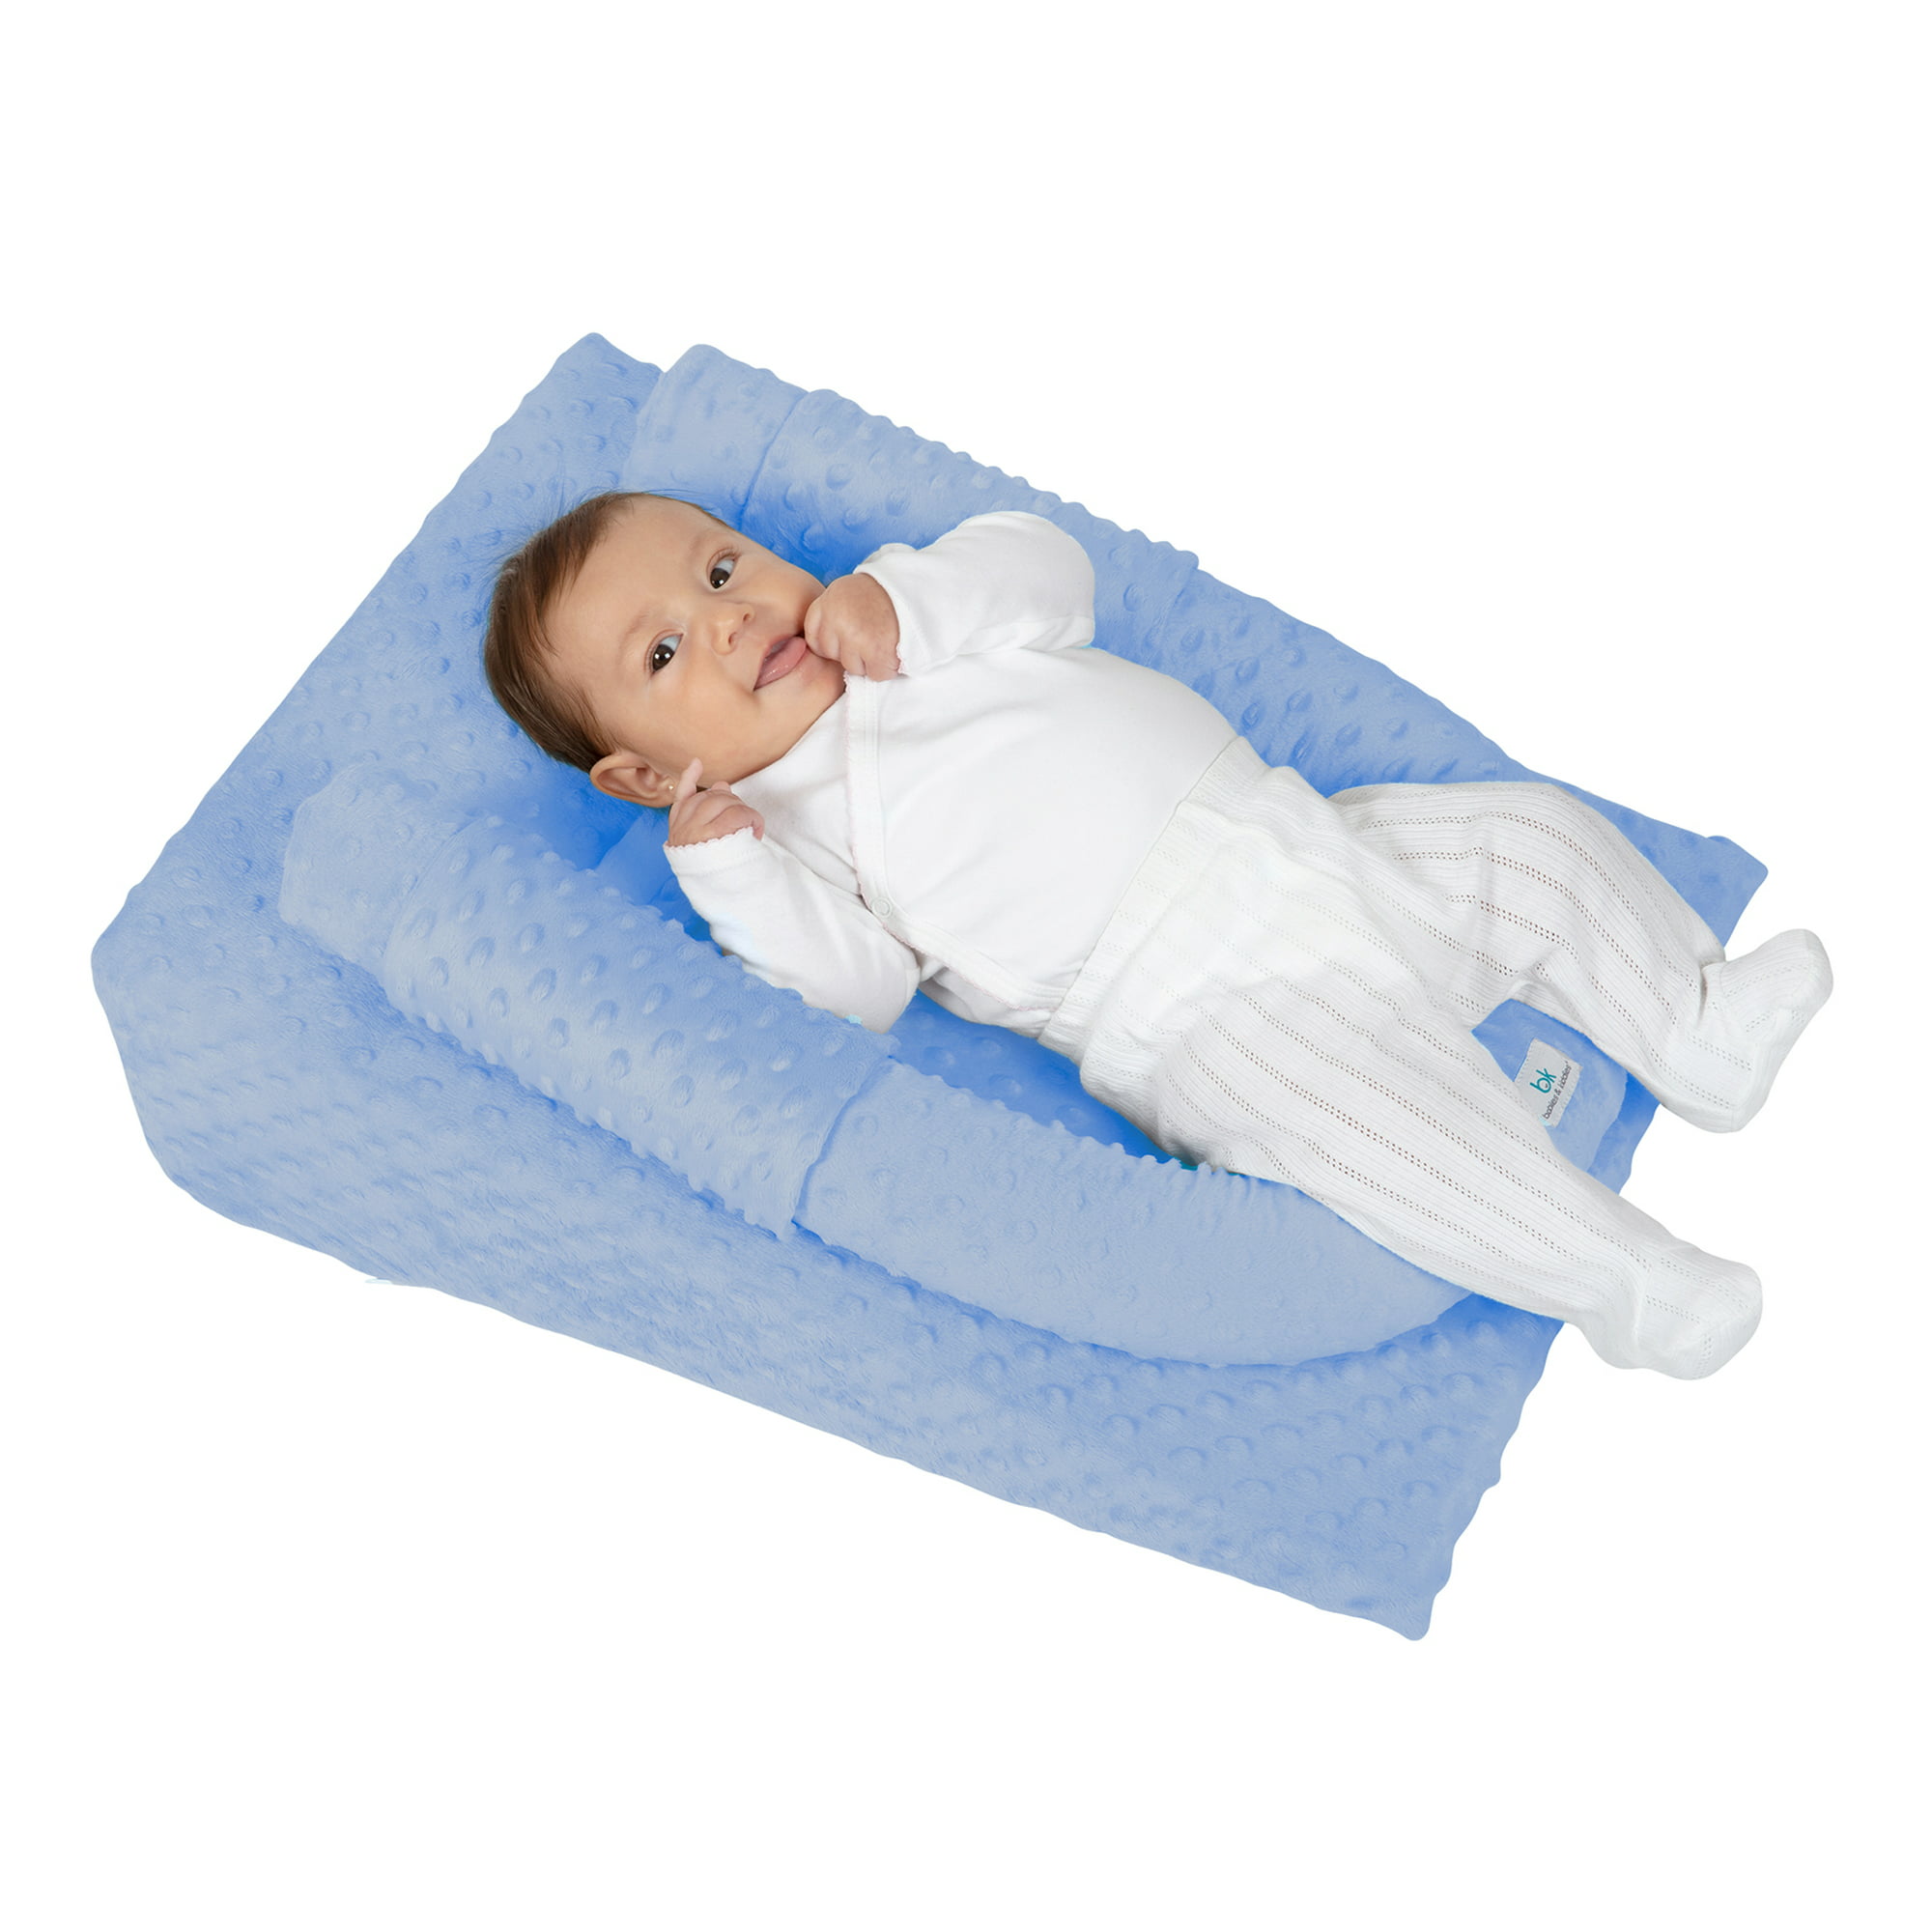 Cojín antireflujo mediano (colchón antirreflujo, antivuelco, reflujo)  Babies and Kiddies Azul